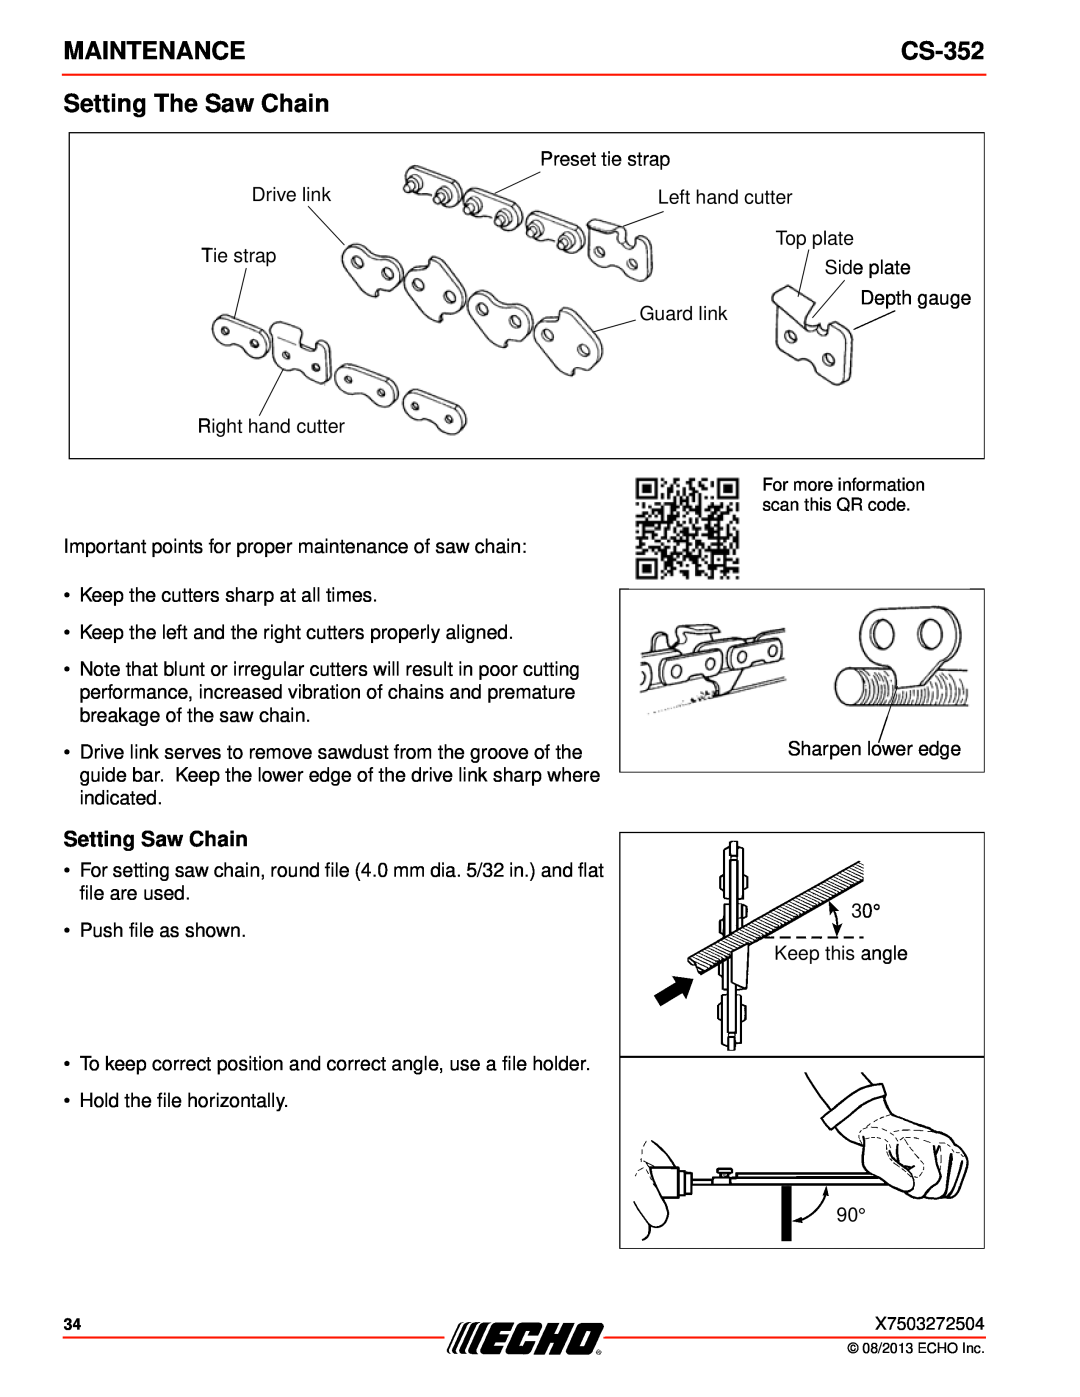 Echo CS-352 instruction manual Setting The Saw Chain, Setting Saw Chain, Maintenance 